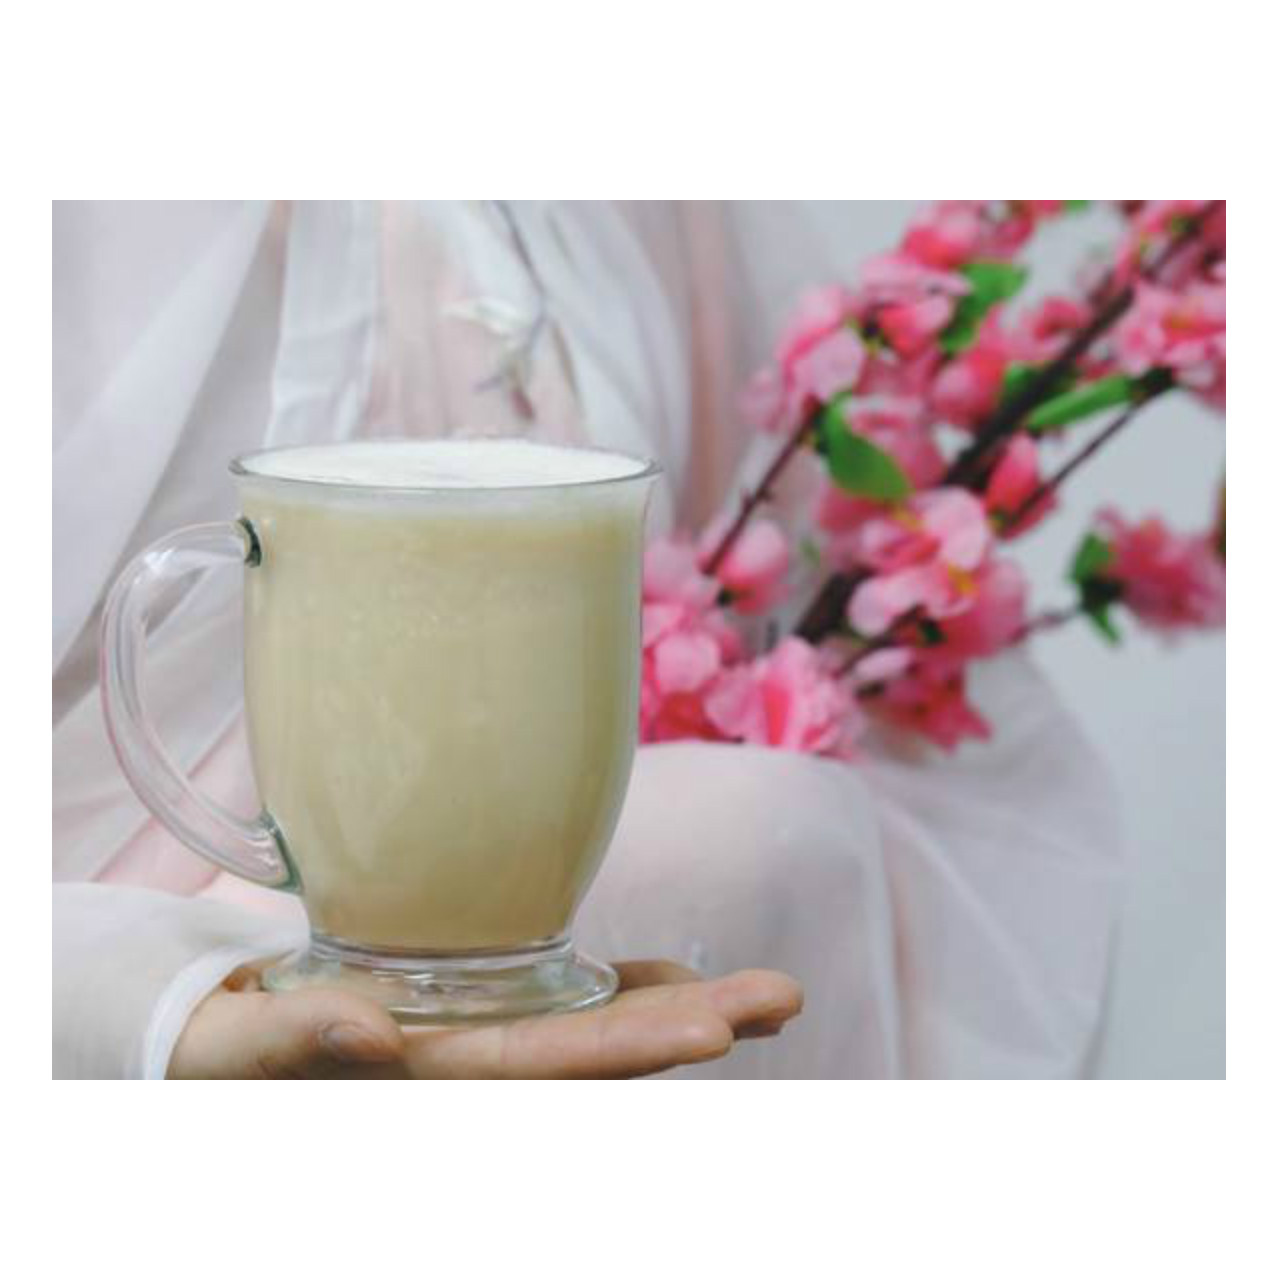 Tieh kuan yin milk tea 500ml